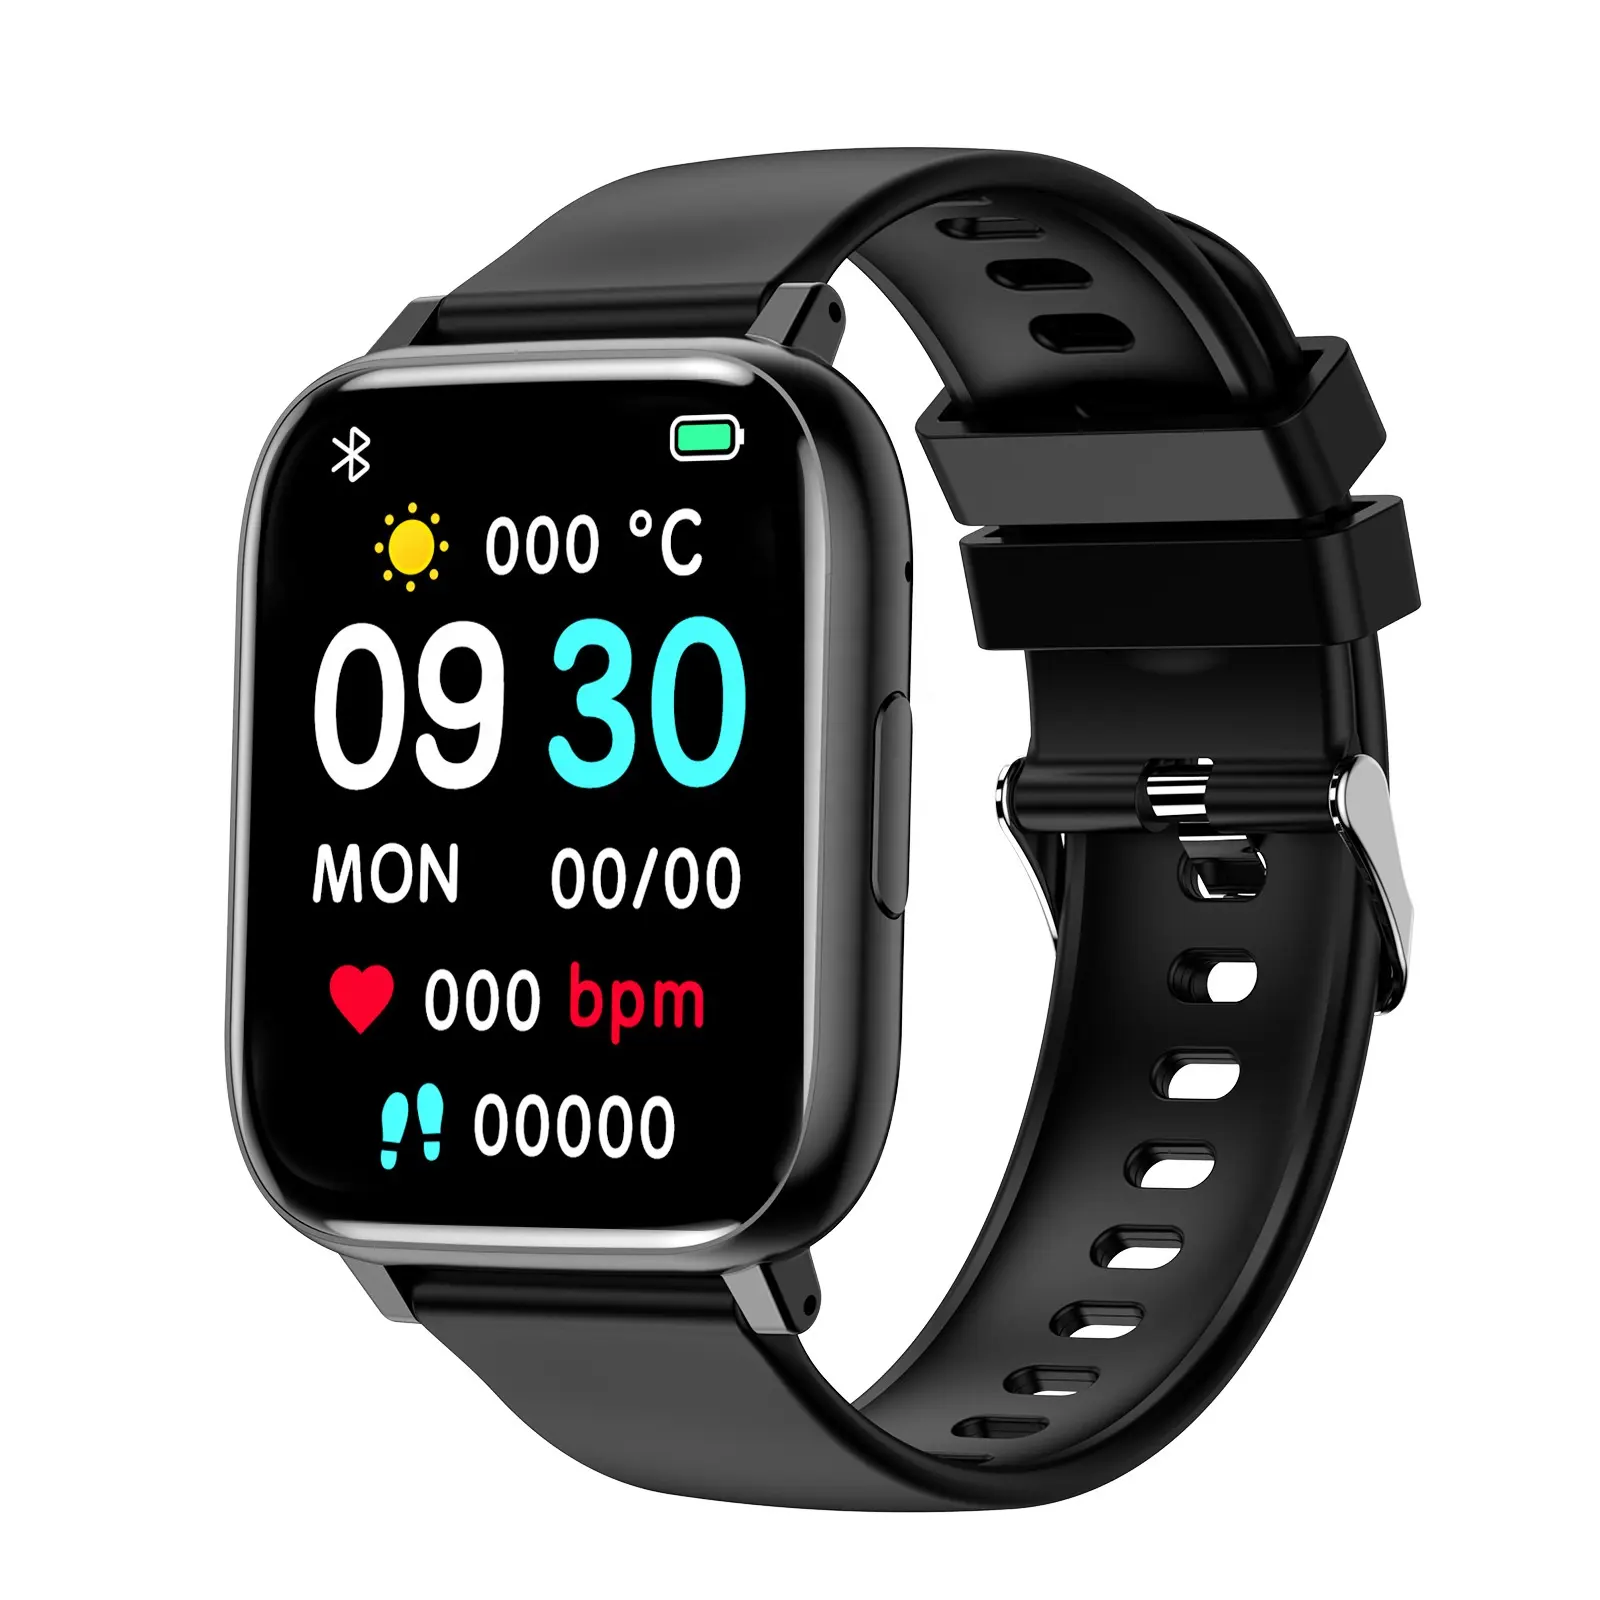 Smart Watch Health Monitoring Bluetooth Call Watch Sports Heart Rate Blood Oxygen Monitoring Smart Watch